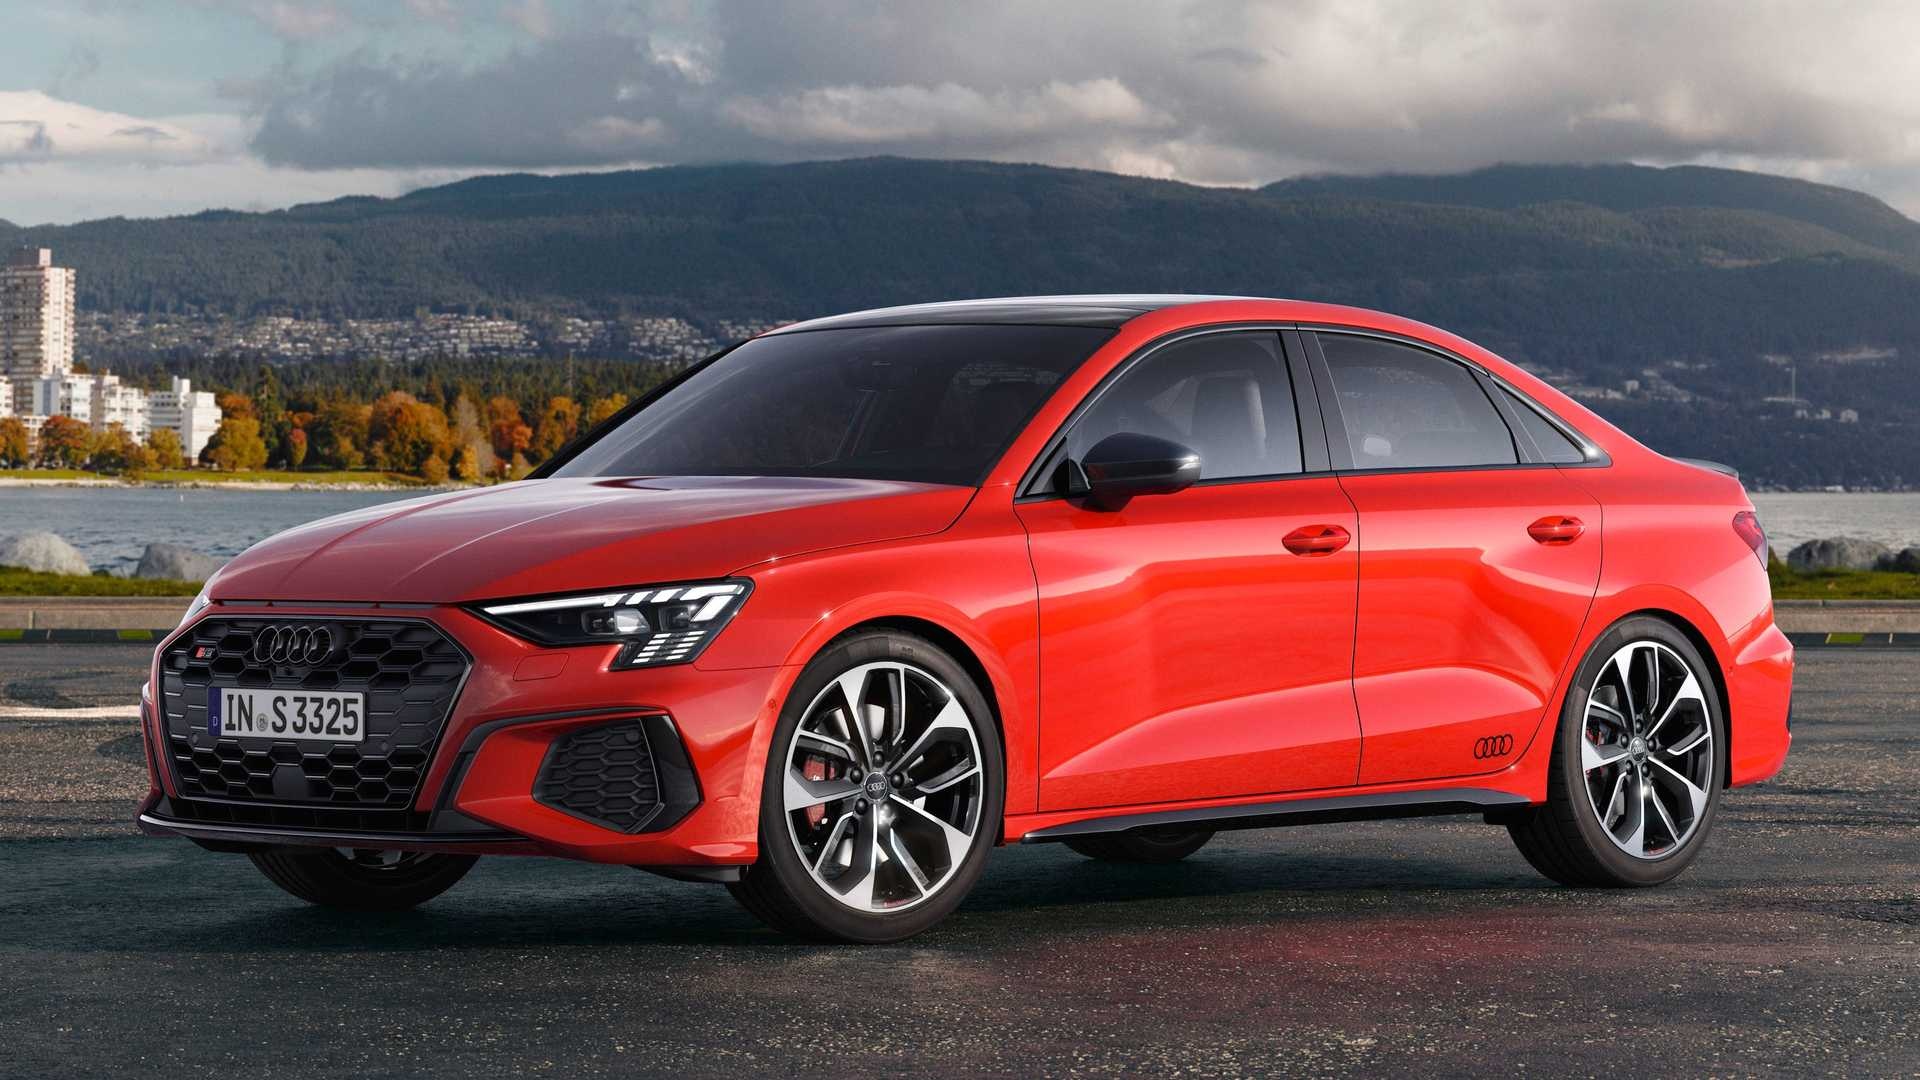 Audi S3, Sedan news, Performance and reviews, Latest updates, 1920x1080 Full HD Desktop